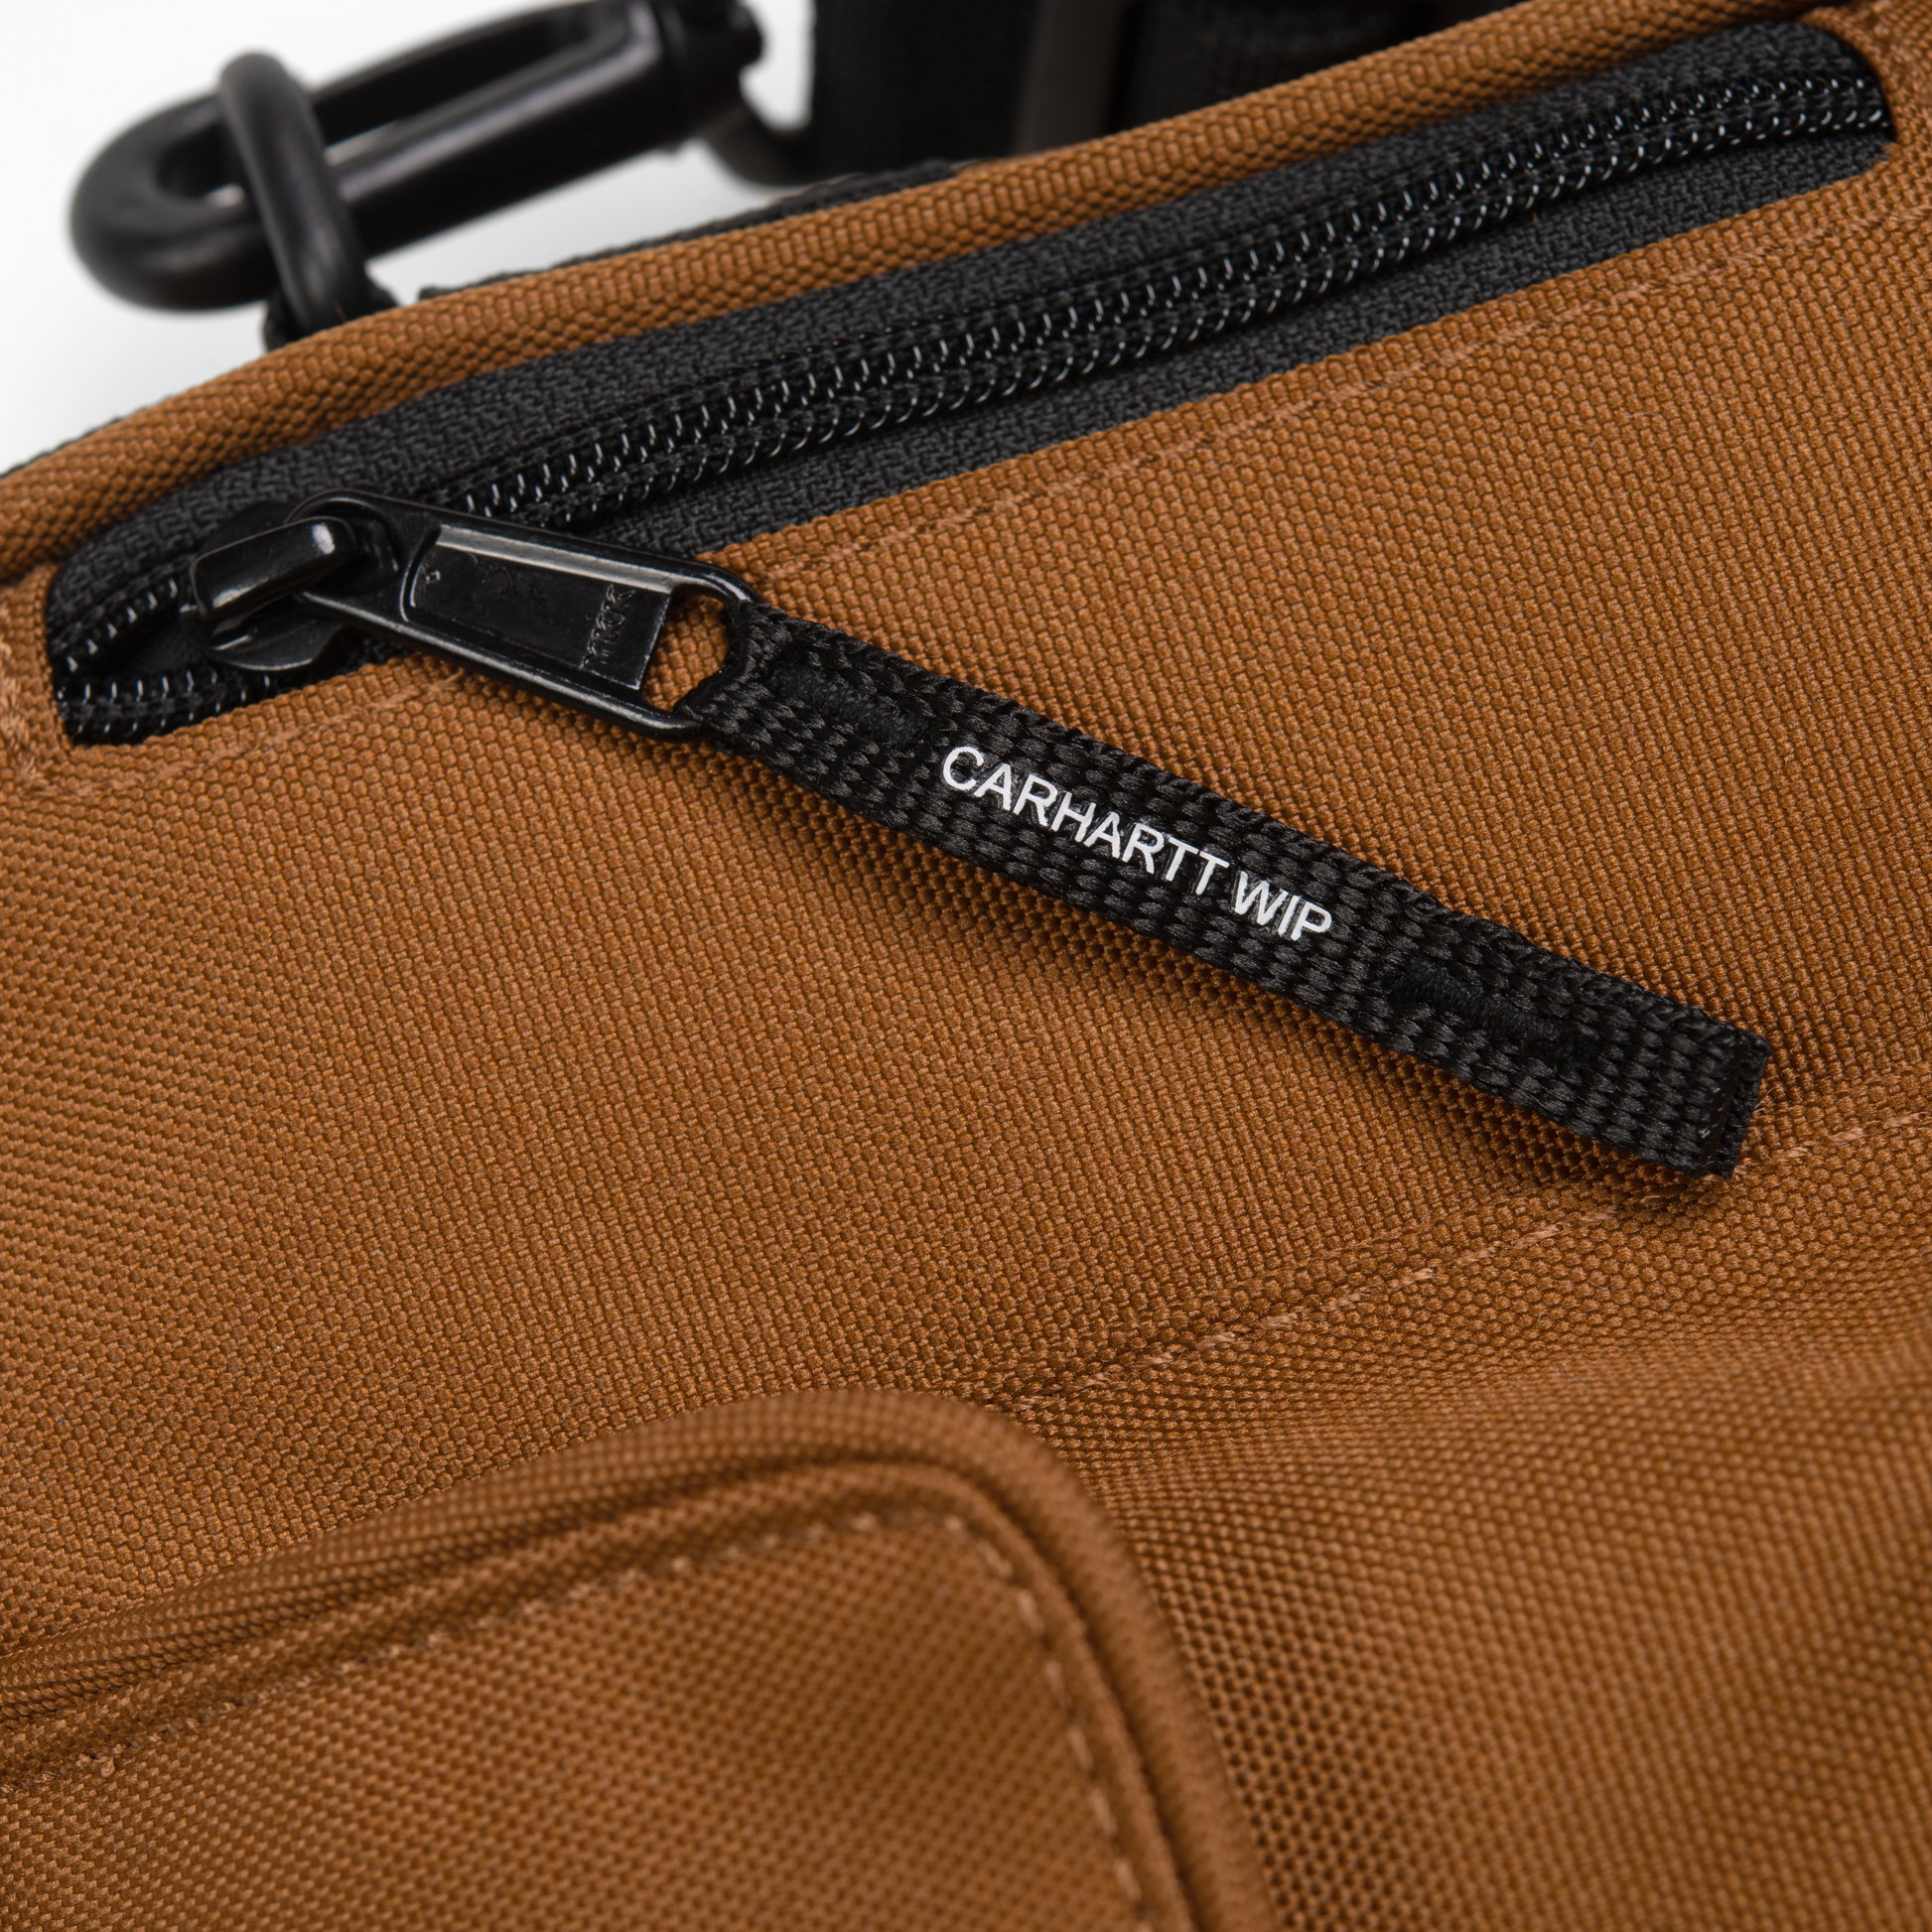 Carhartt WIP Essentials Bag Hamilton Brown. Foto de detalhe do fecho zipper.